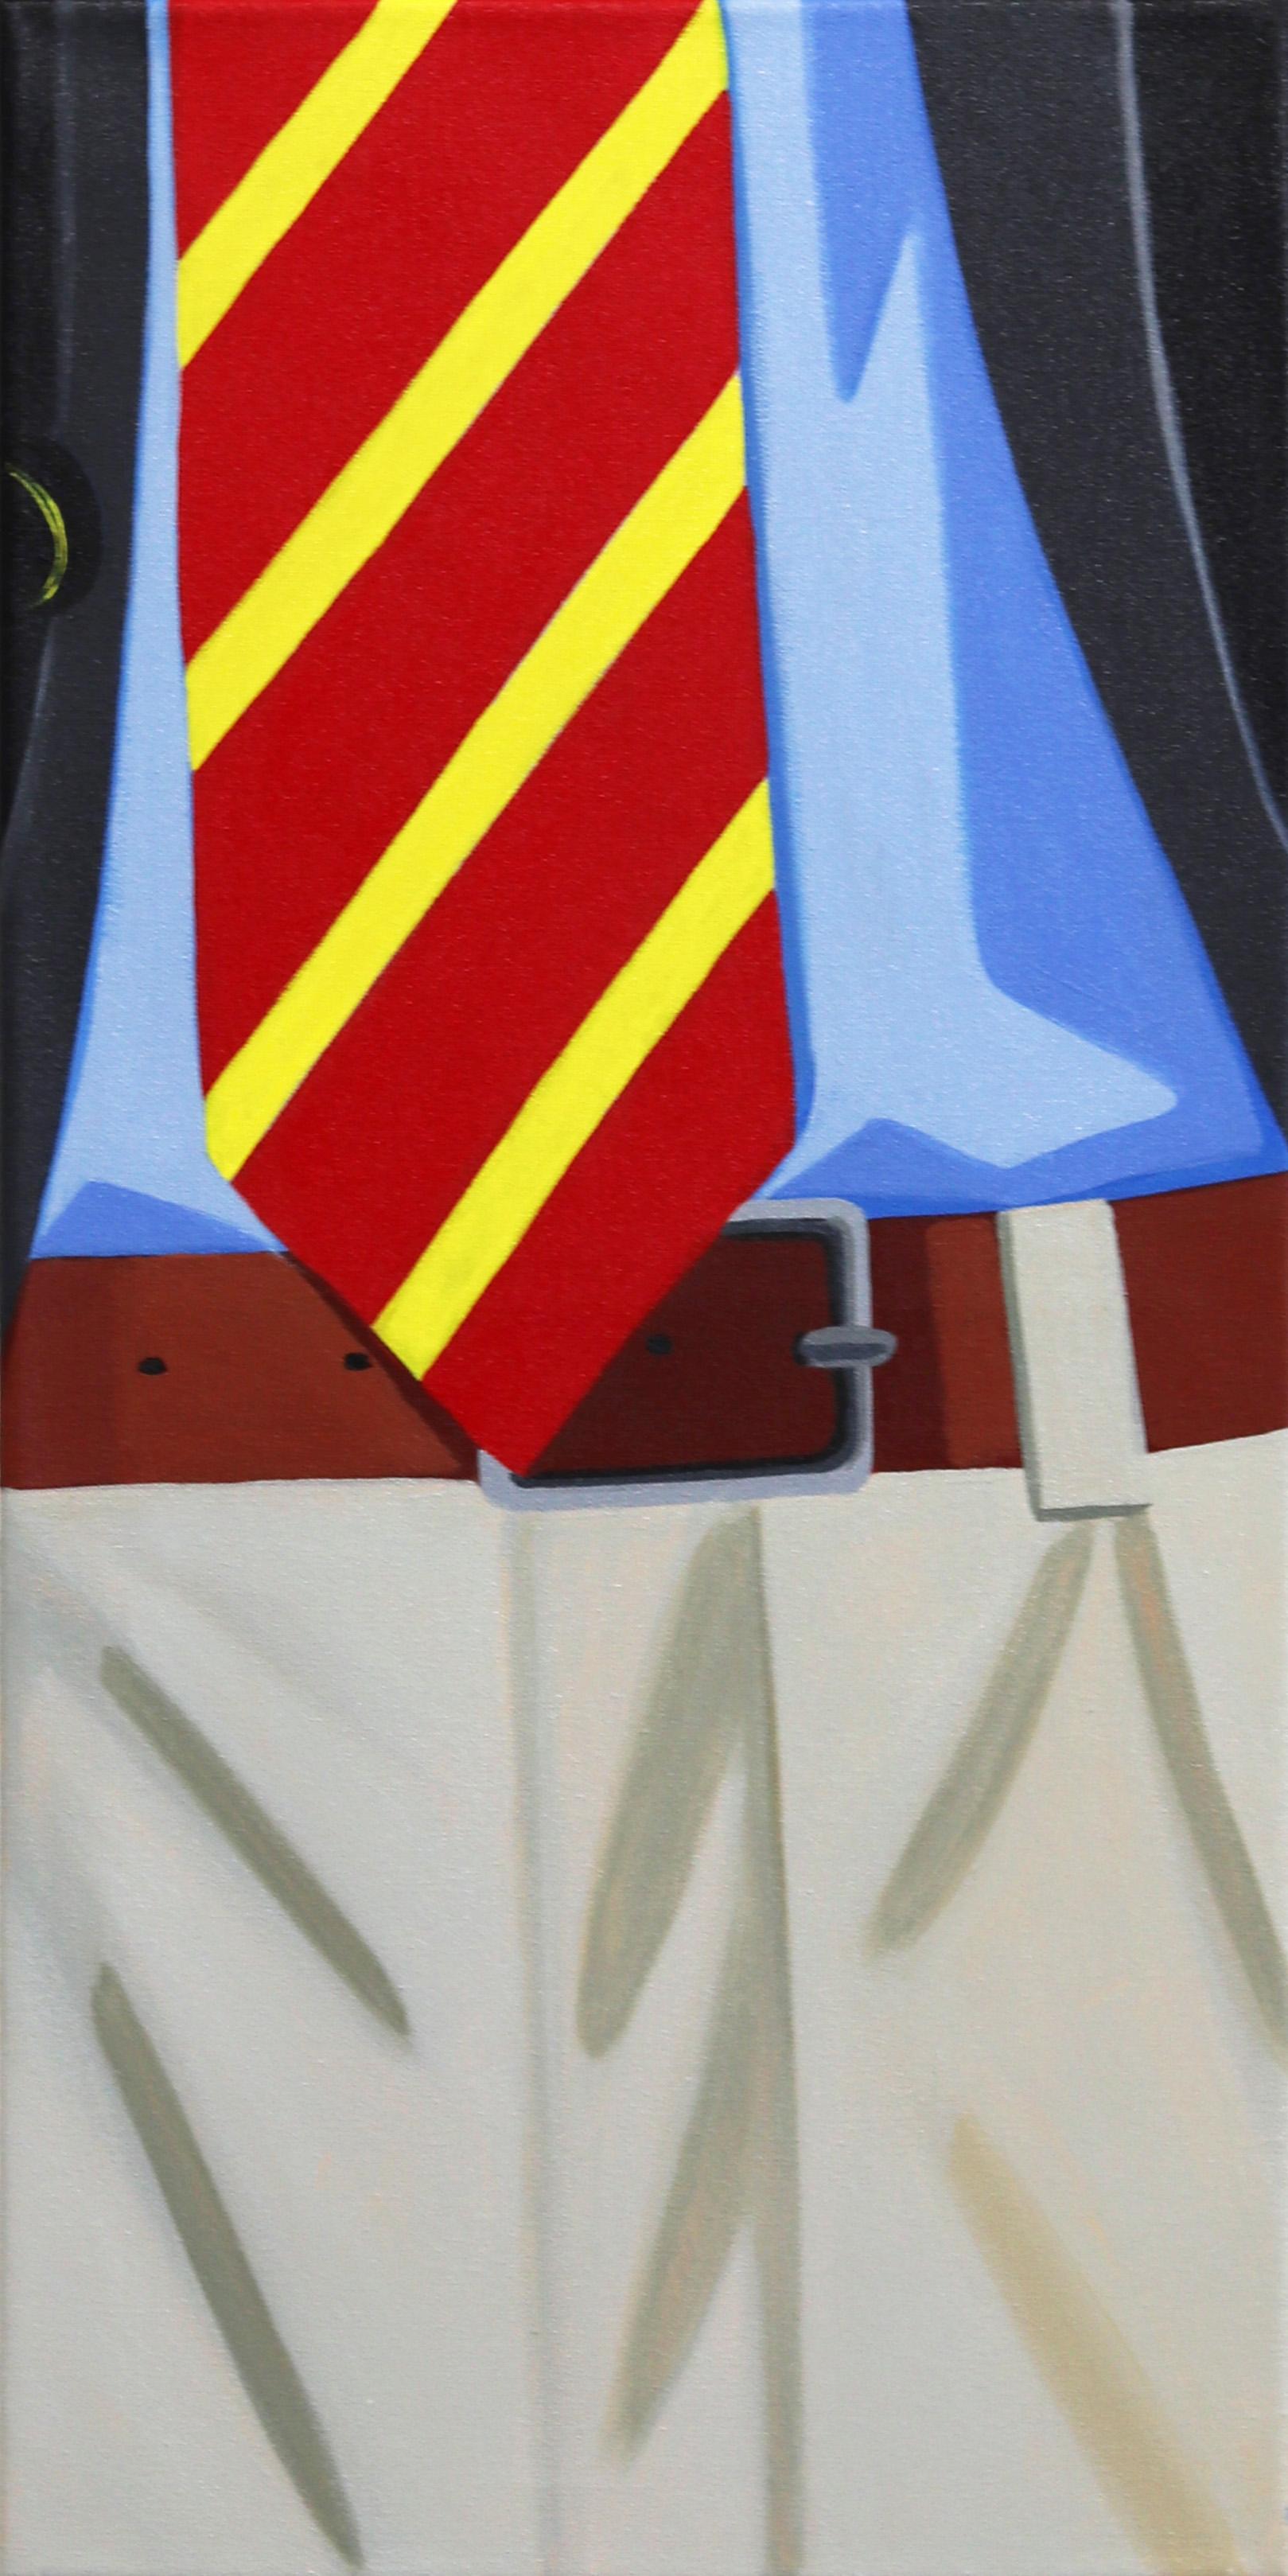 Red and Yellow - Pop Art Minimalist Tie and Belt Original Artwork on Canvas